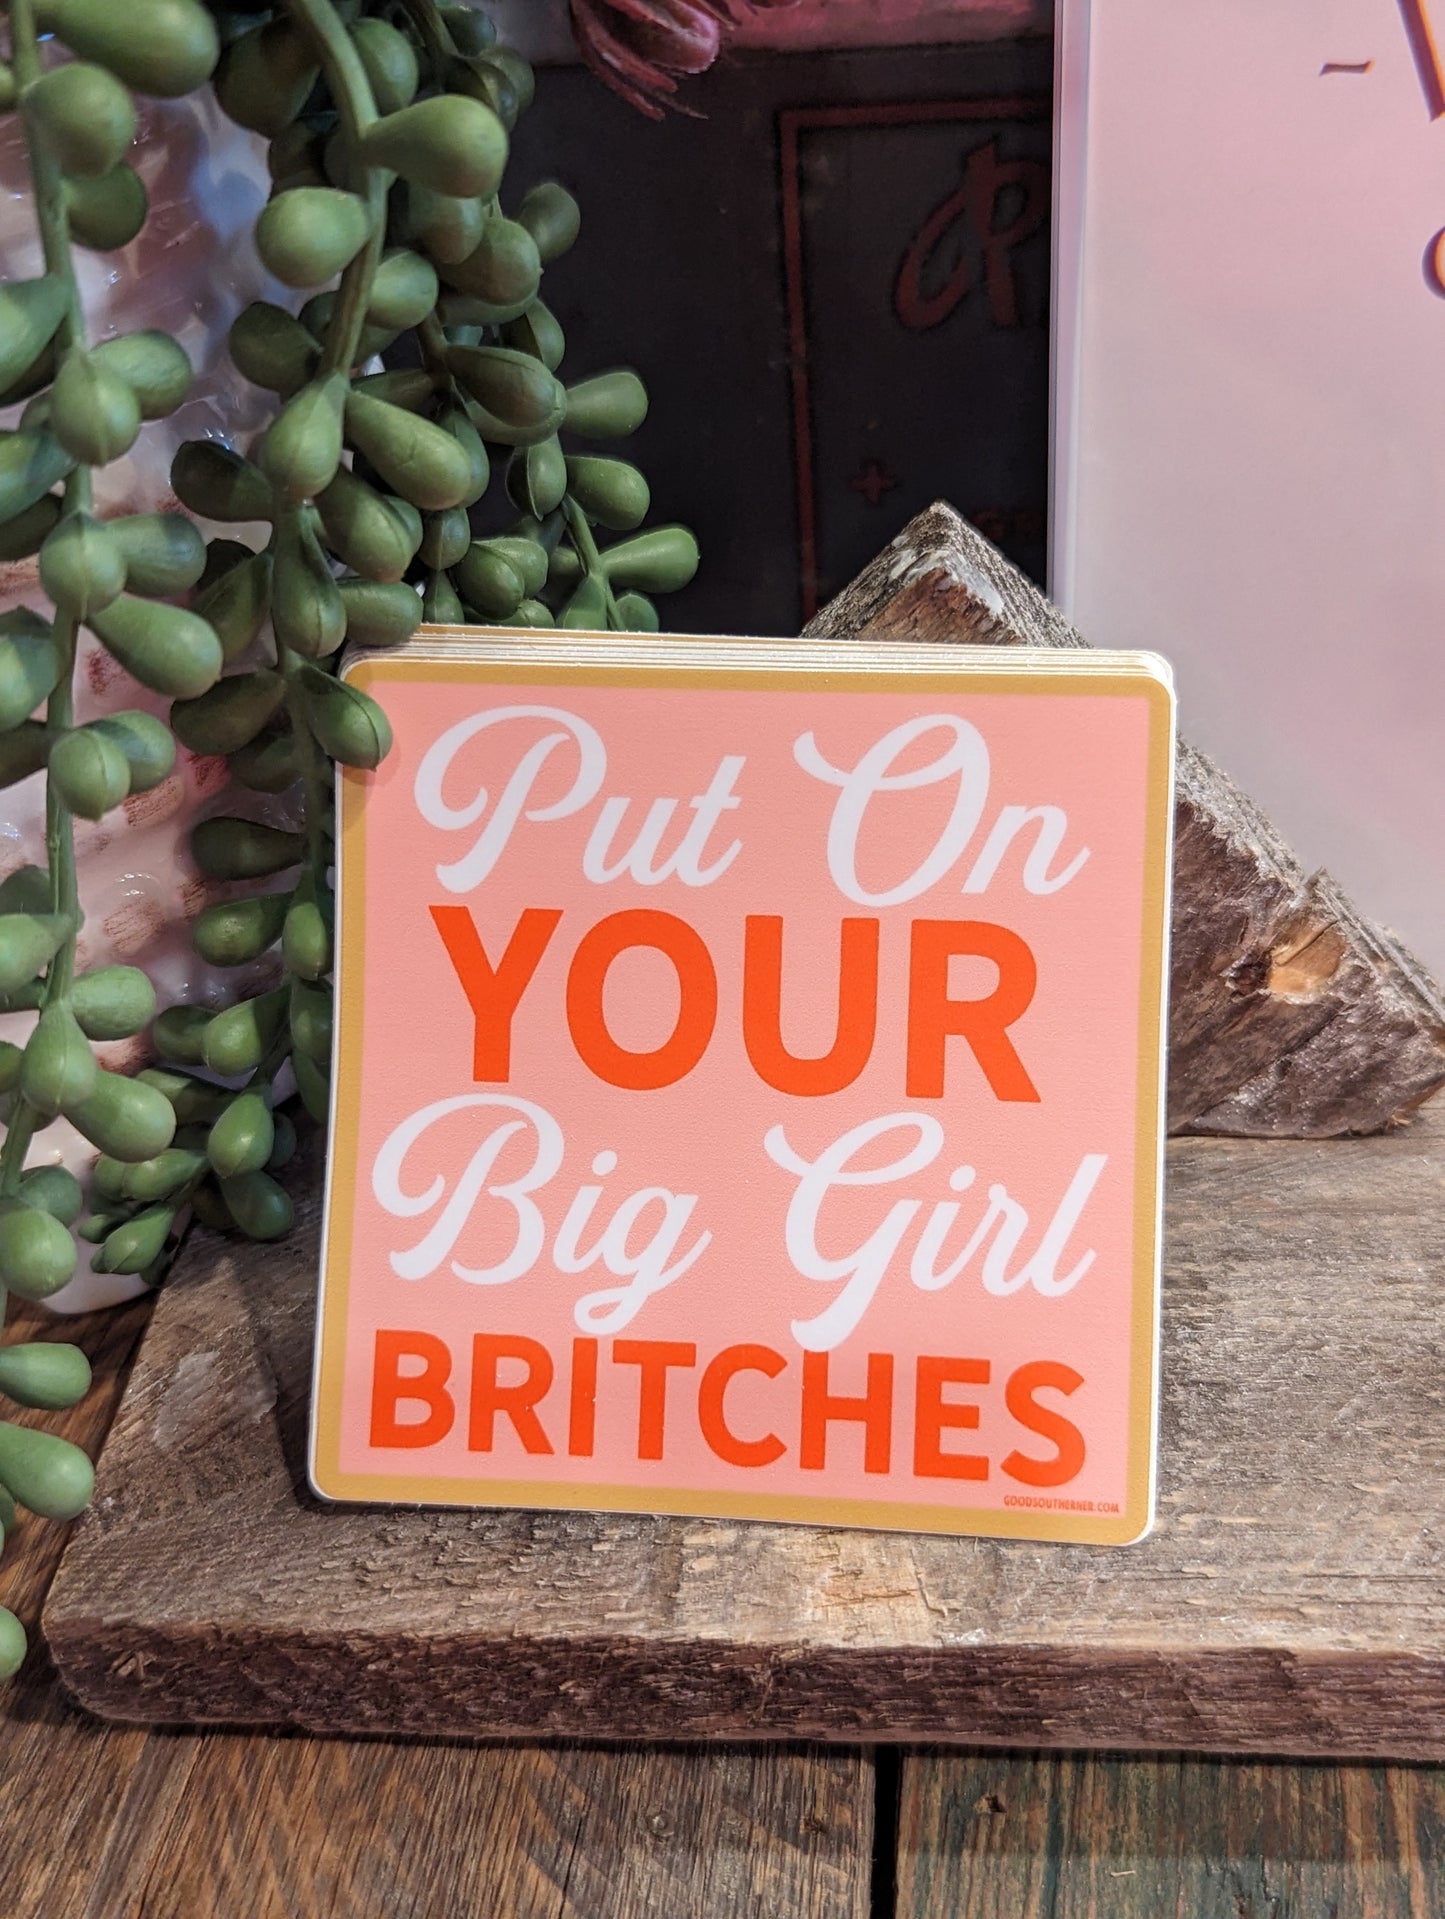 Big Girl Britches sticker